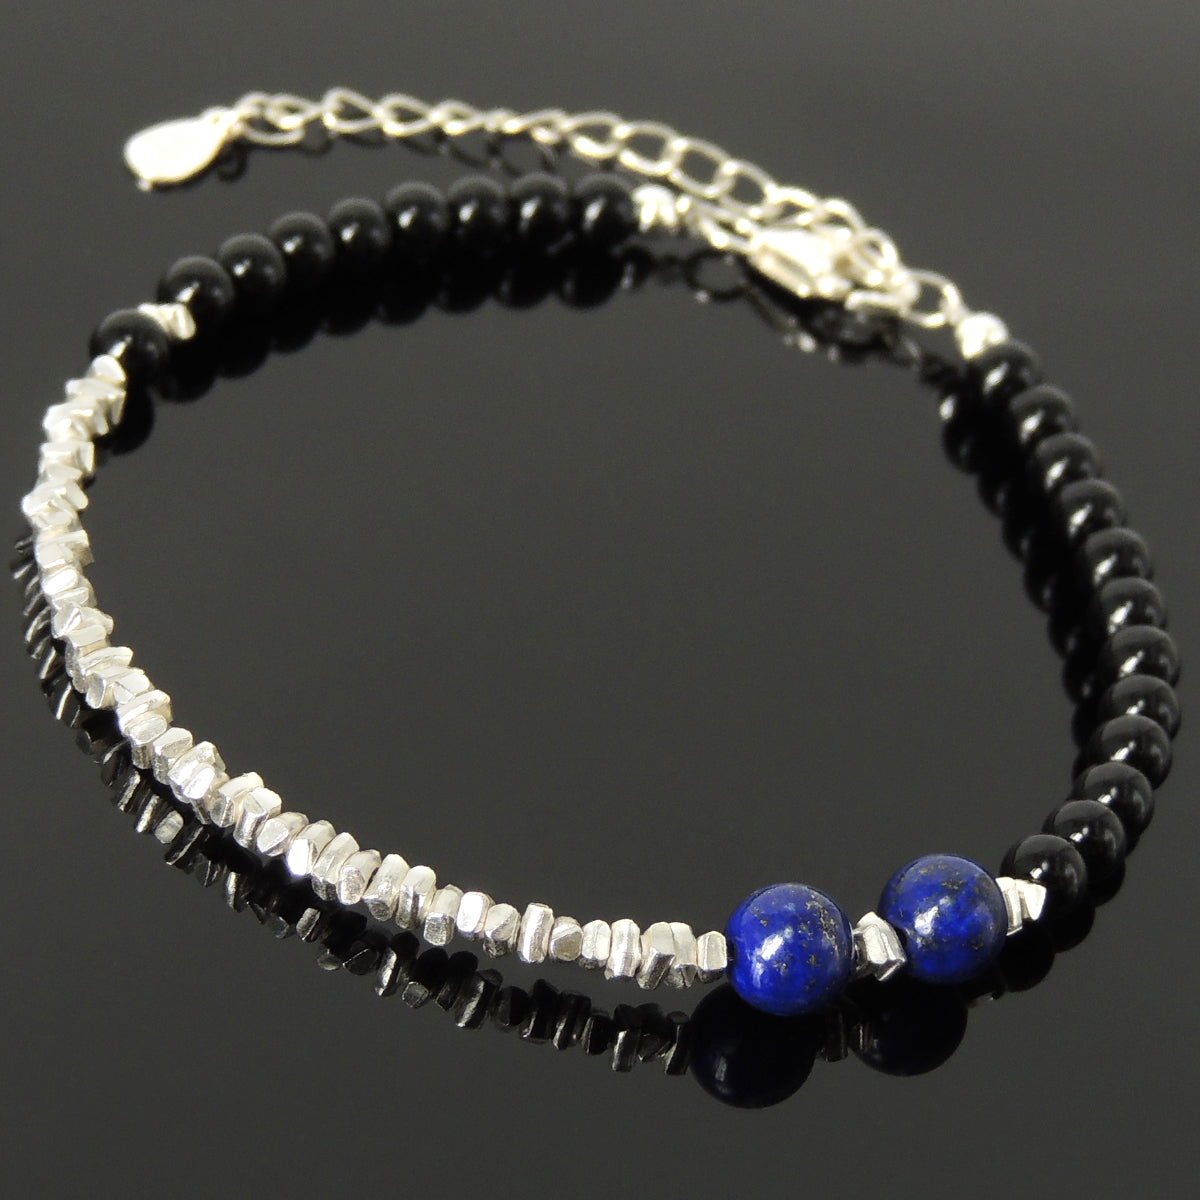 Handmade Festival Fashion Bracelet - Bright Black Onyx, Lapis Lazuli, Genuine S925 Sterling Silver Nugget Beads, Adjustable Chain Link, Clasp BR1665